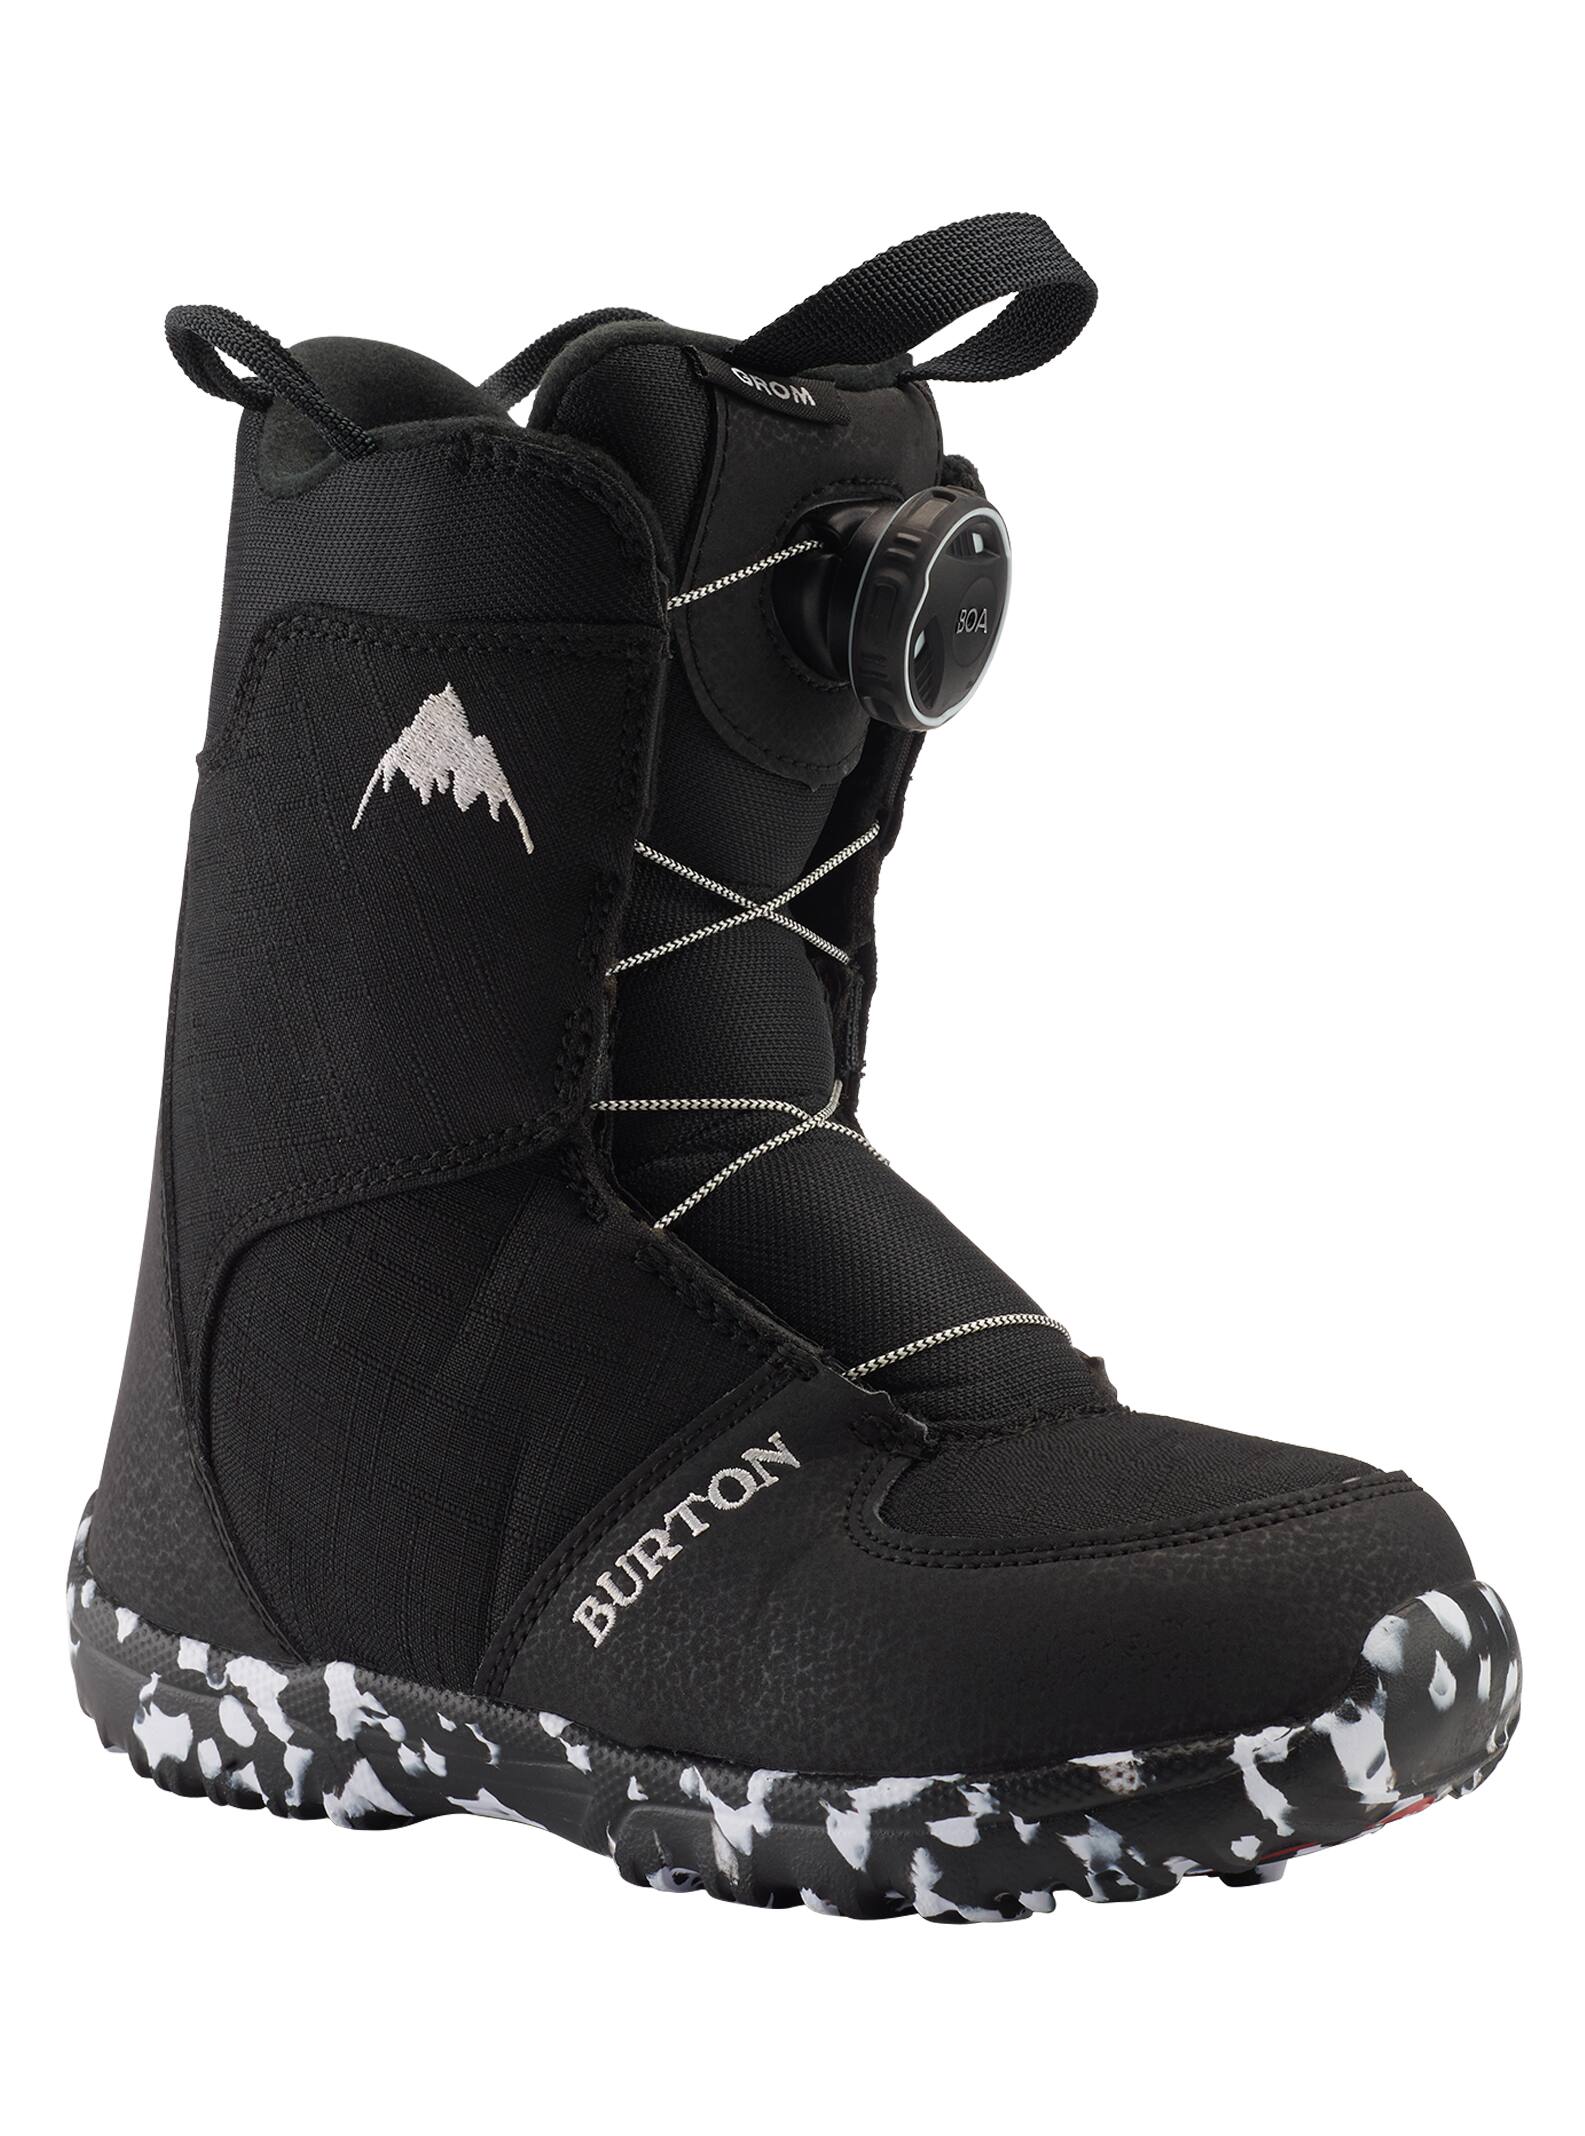 Burton - Boots de snowboard Grom Boa®, Black, 11C